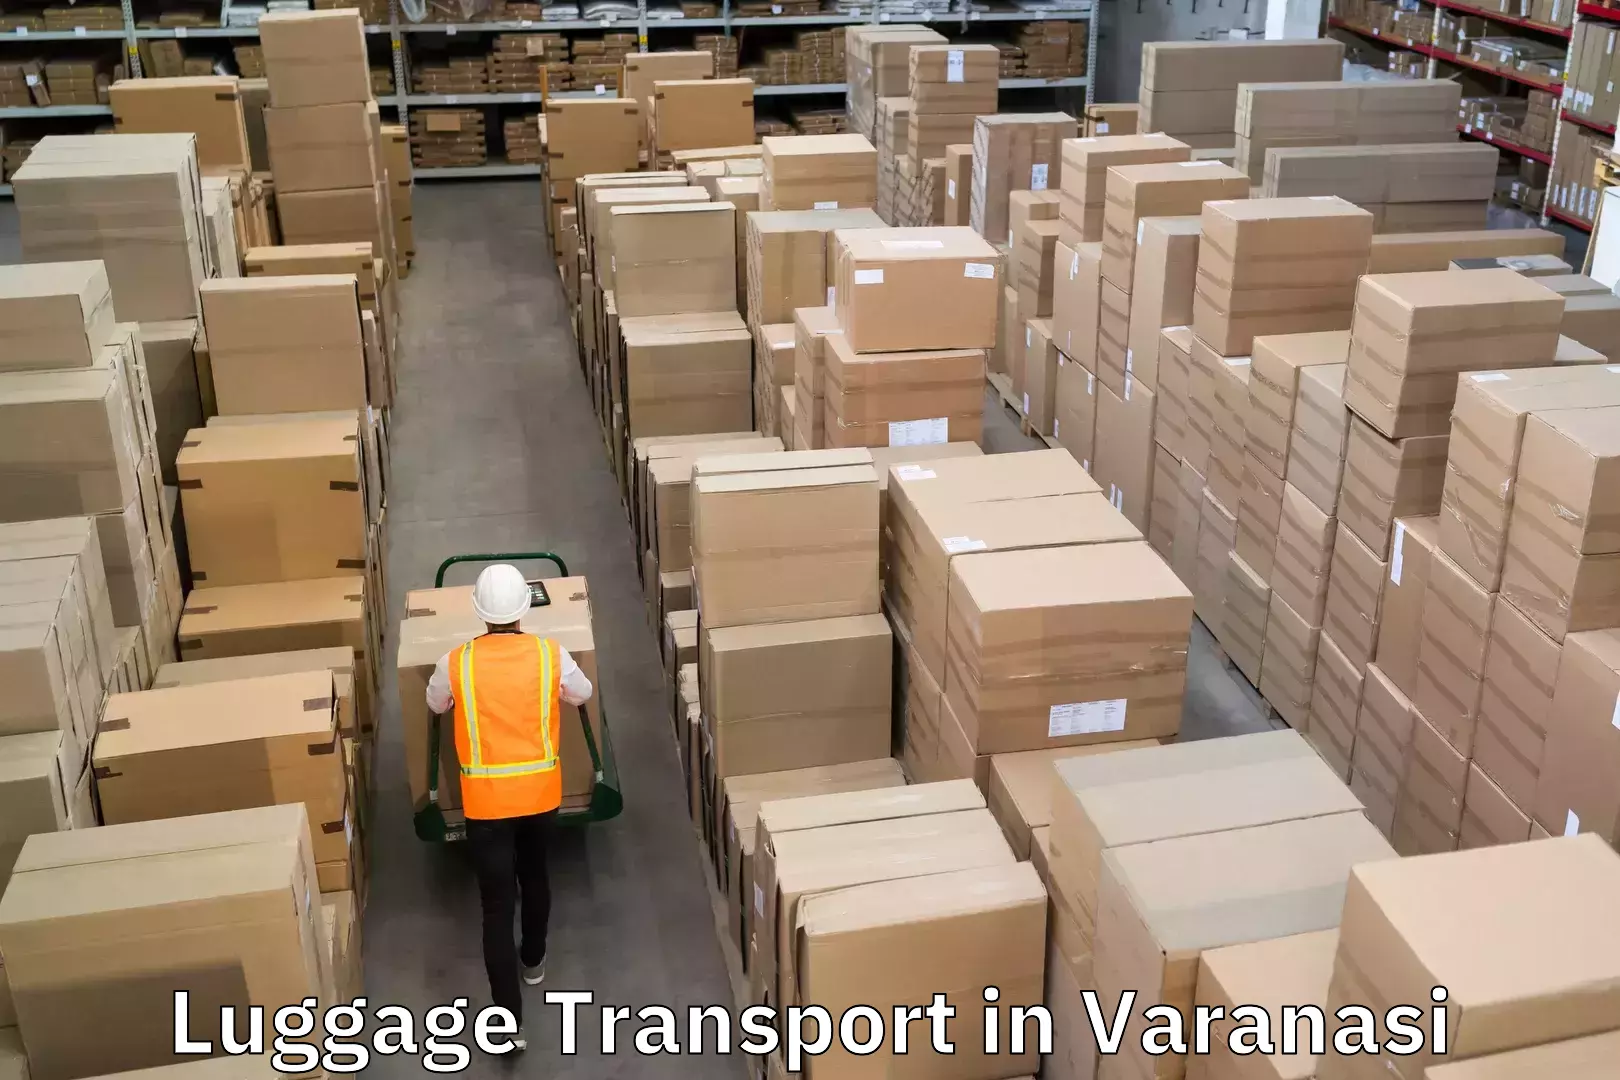 Luggage transport consultancy in Varanasi